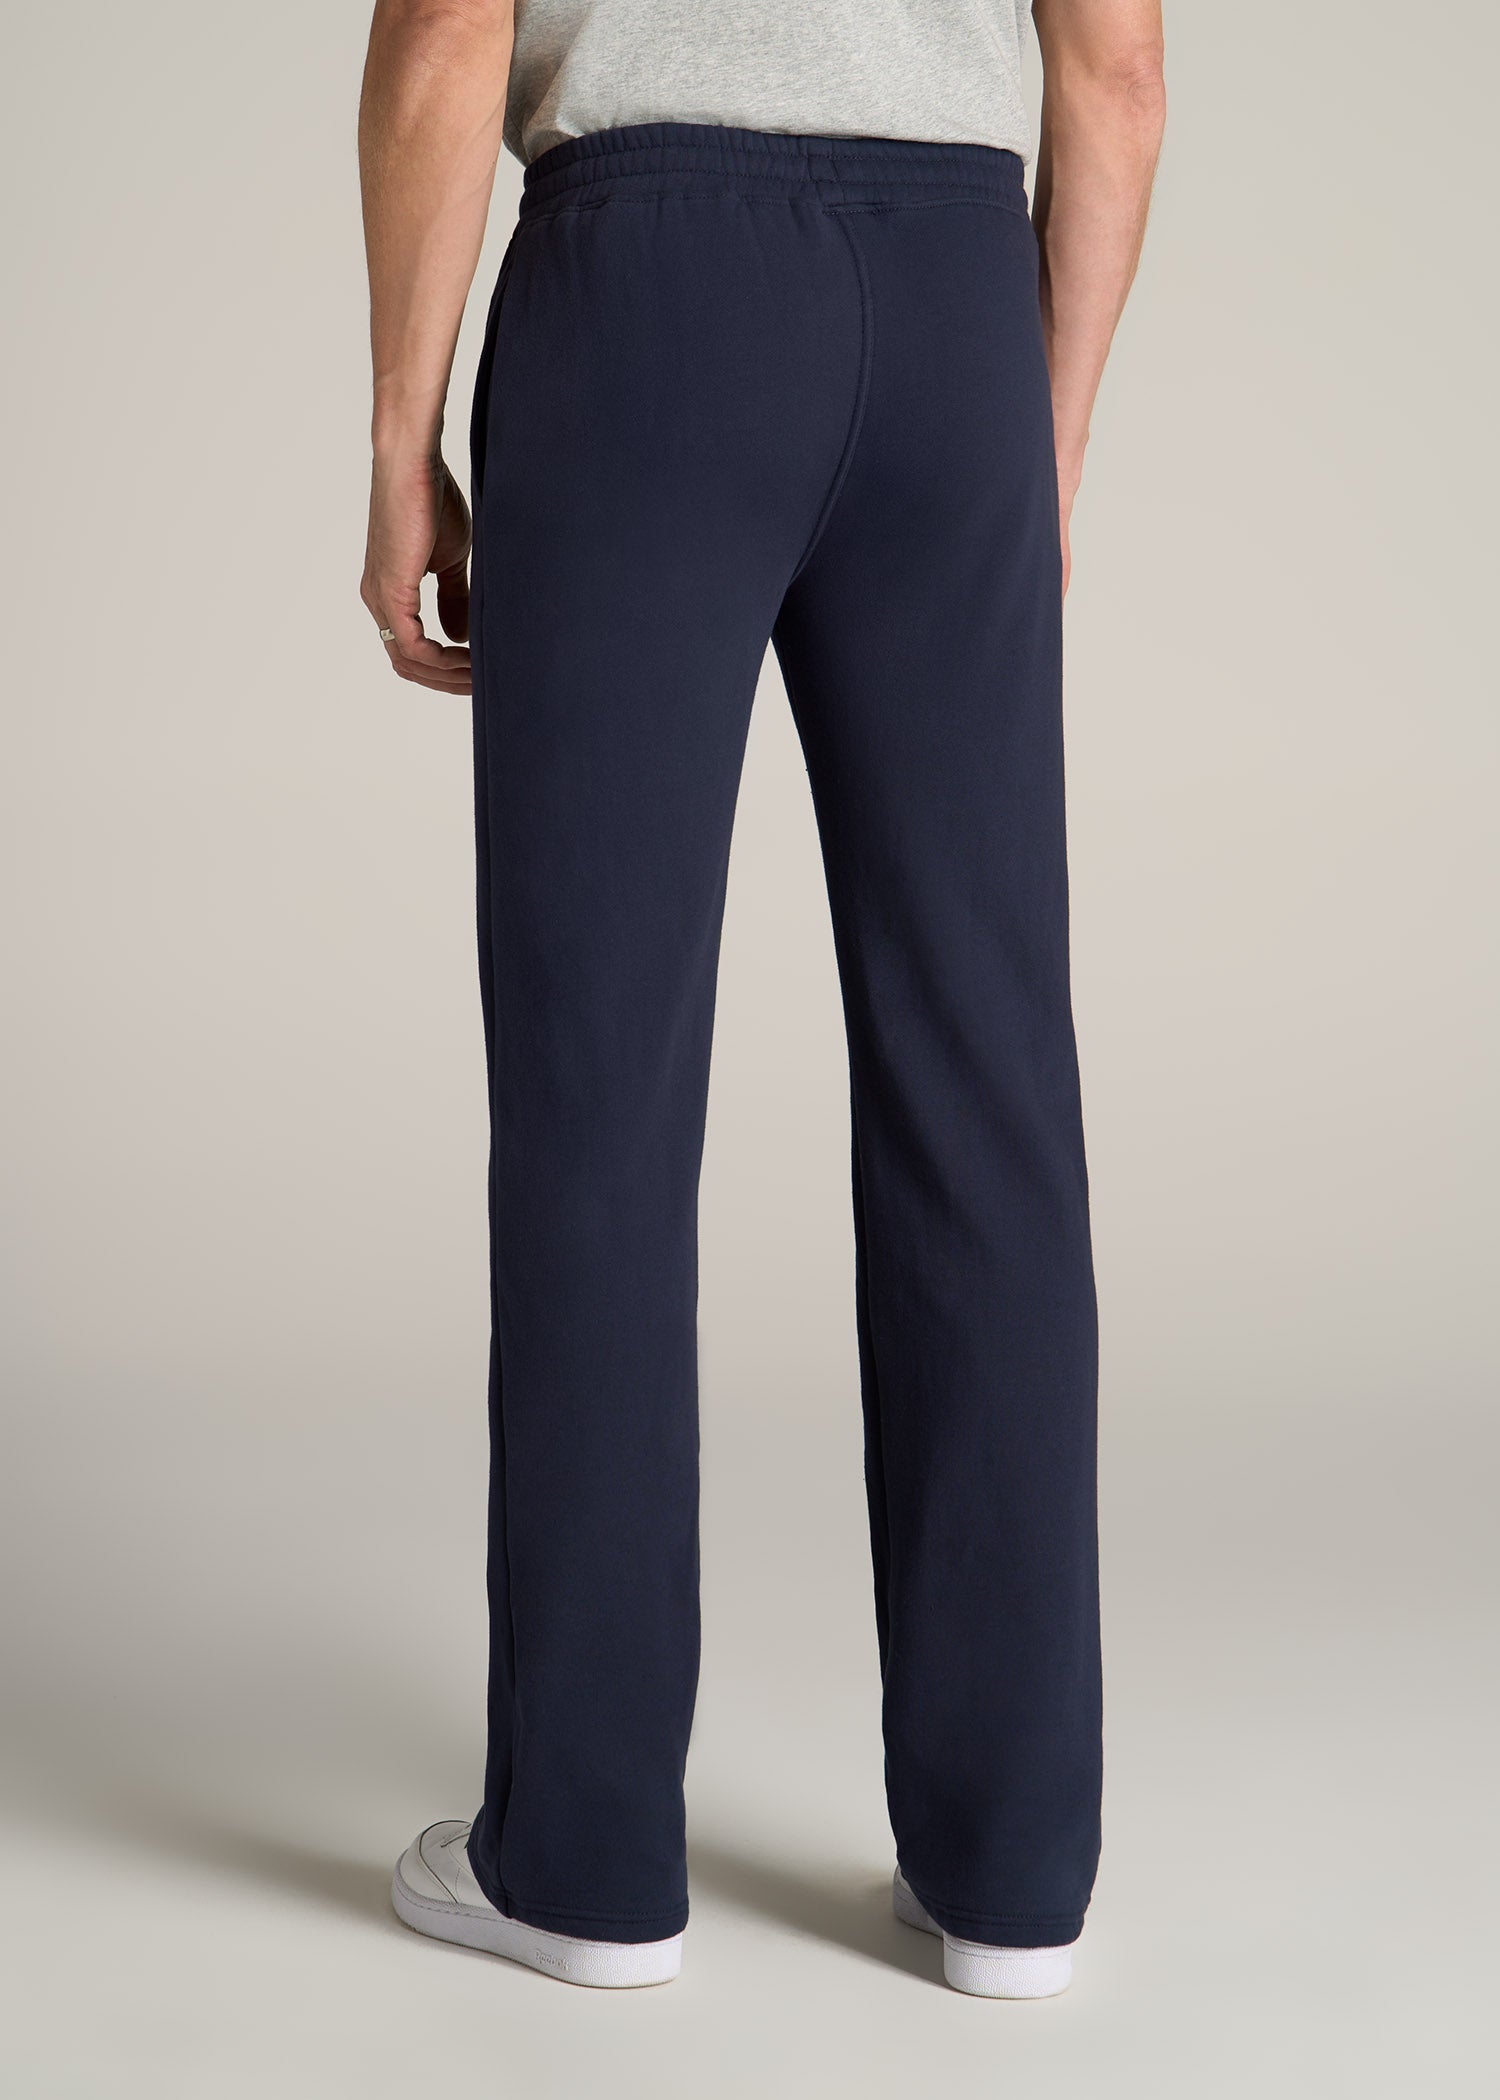 Wearever Fleece Open-Bottom Sweatpants for Tall Men in Navy